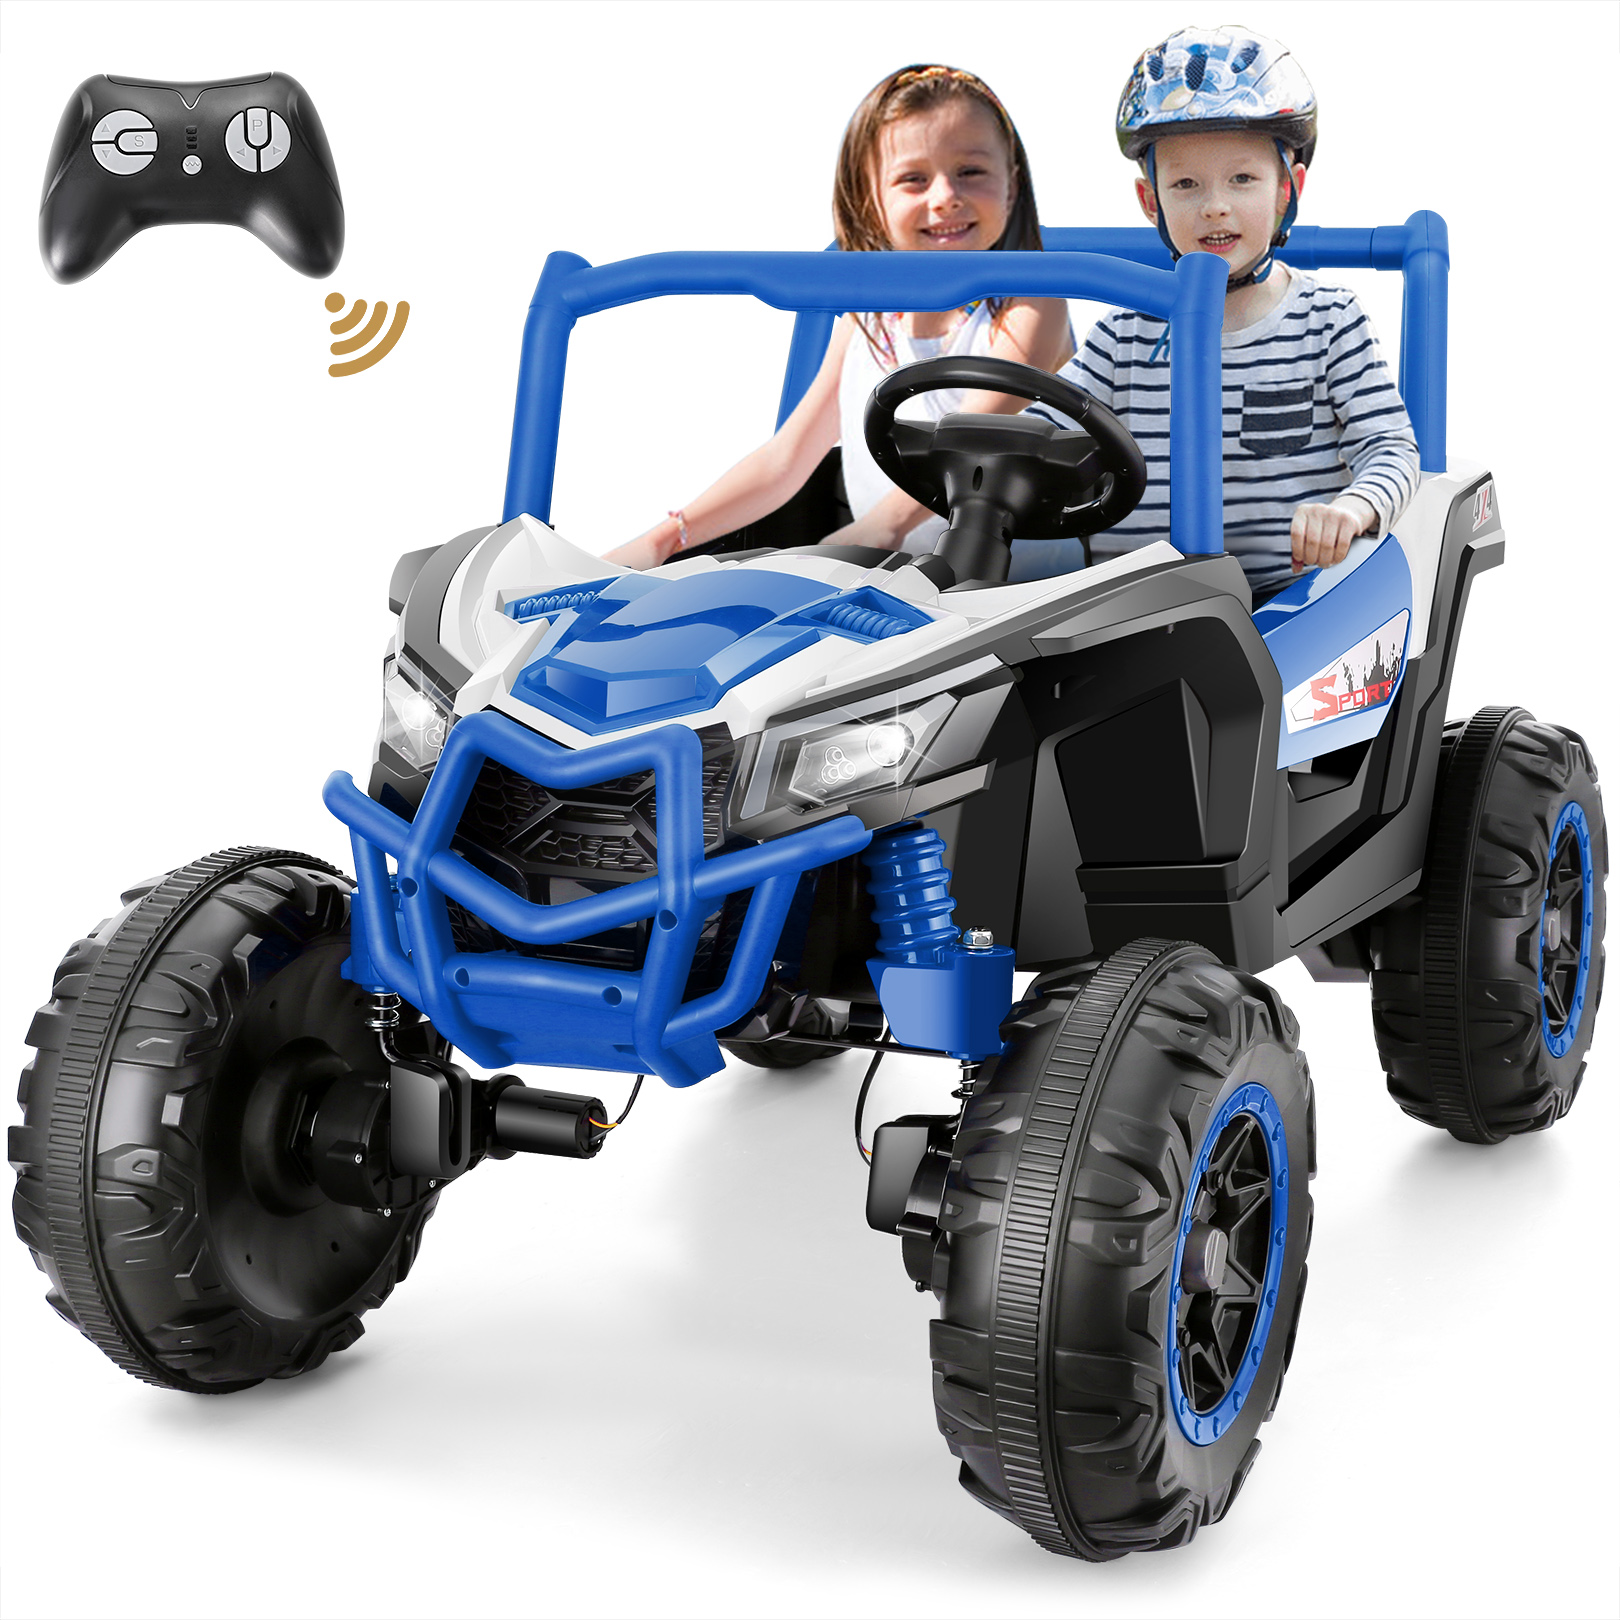 Funcid 4WD 24V Ride on Toys